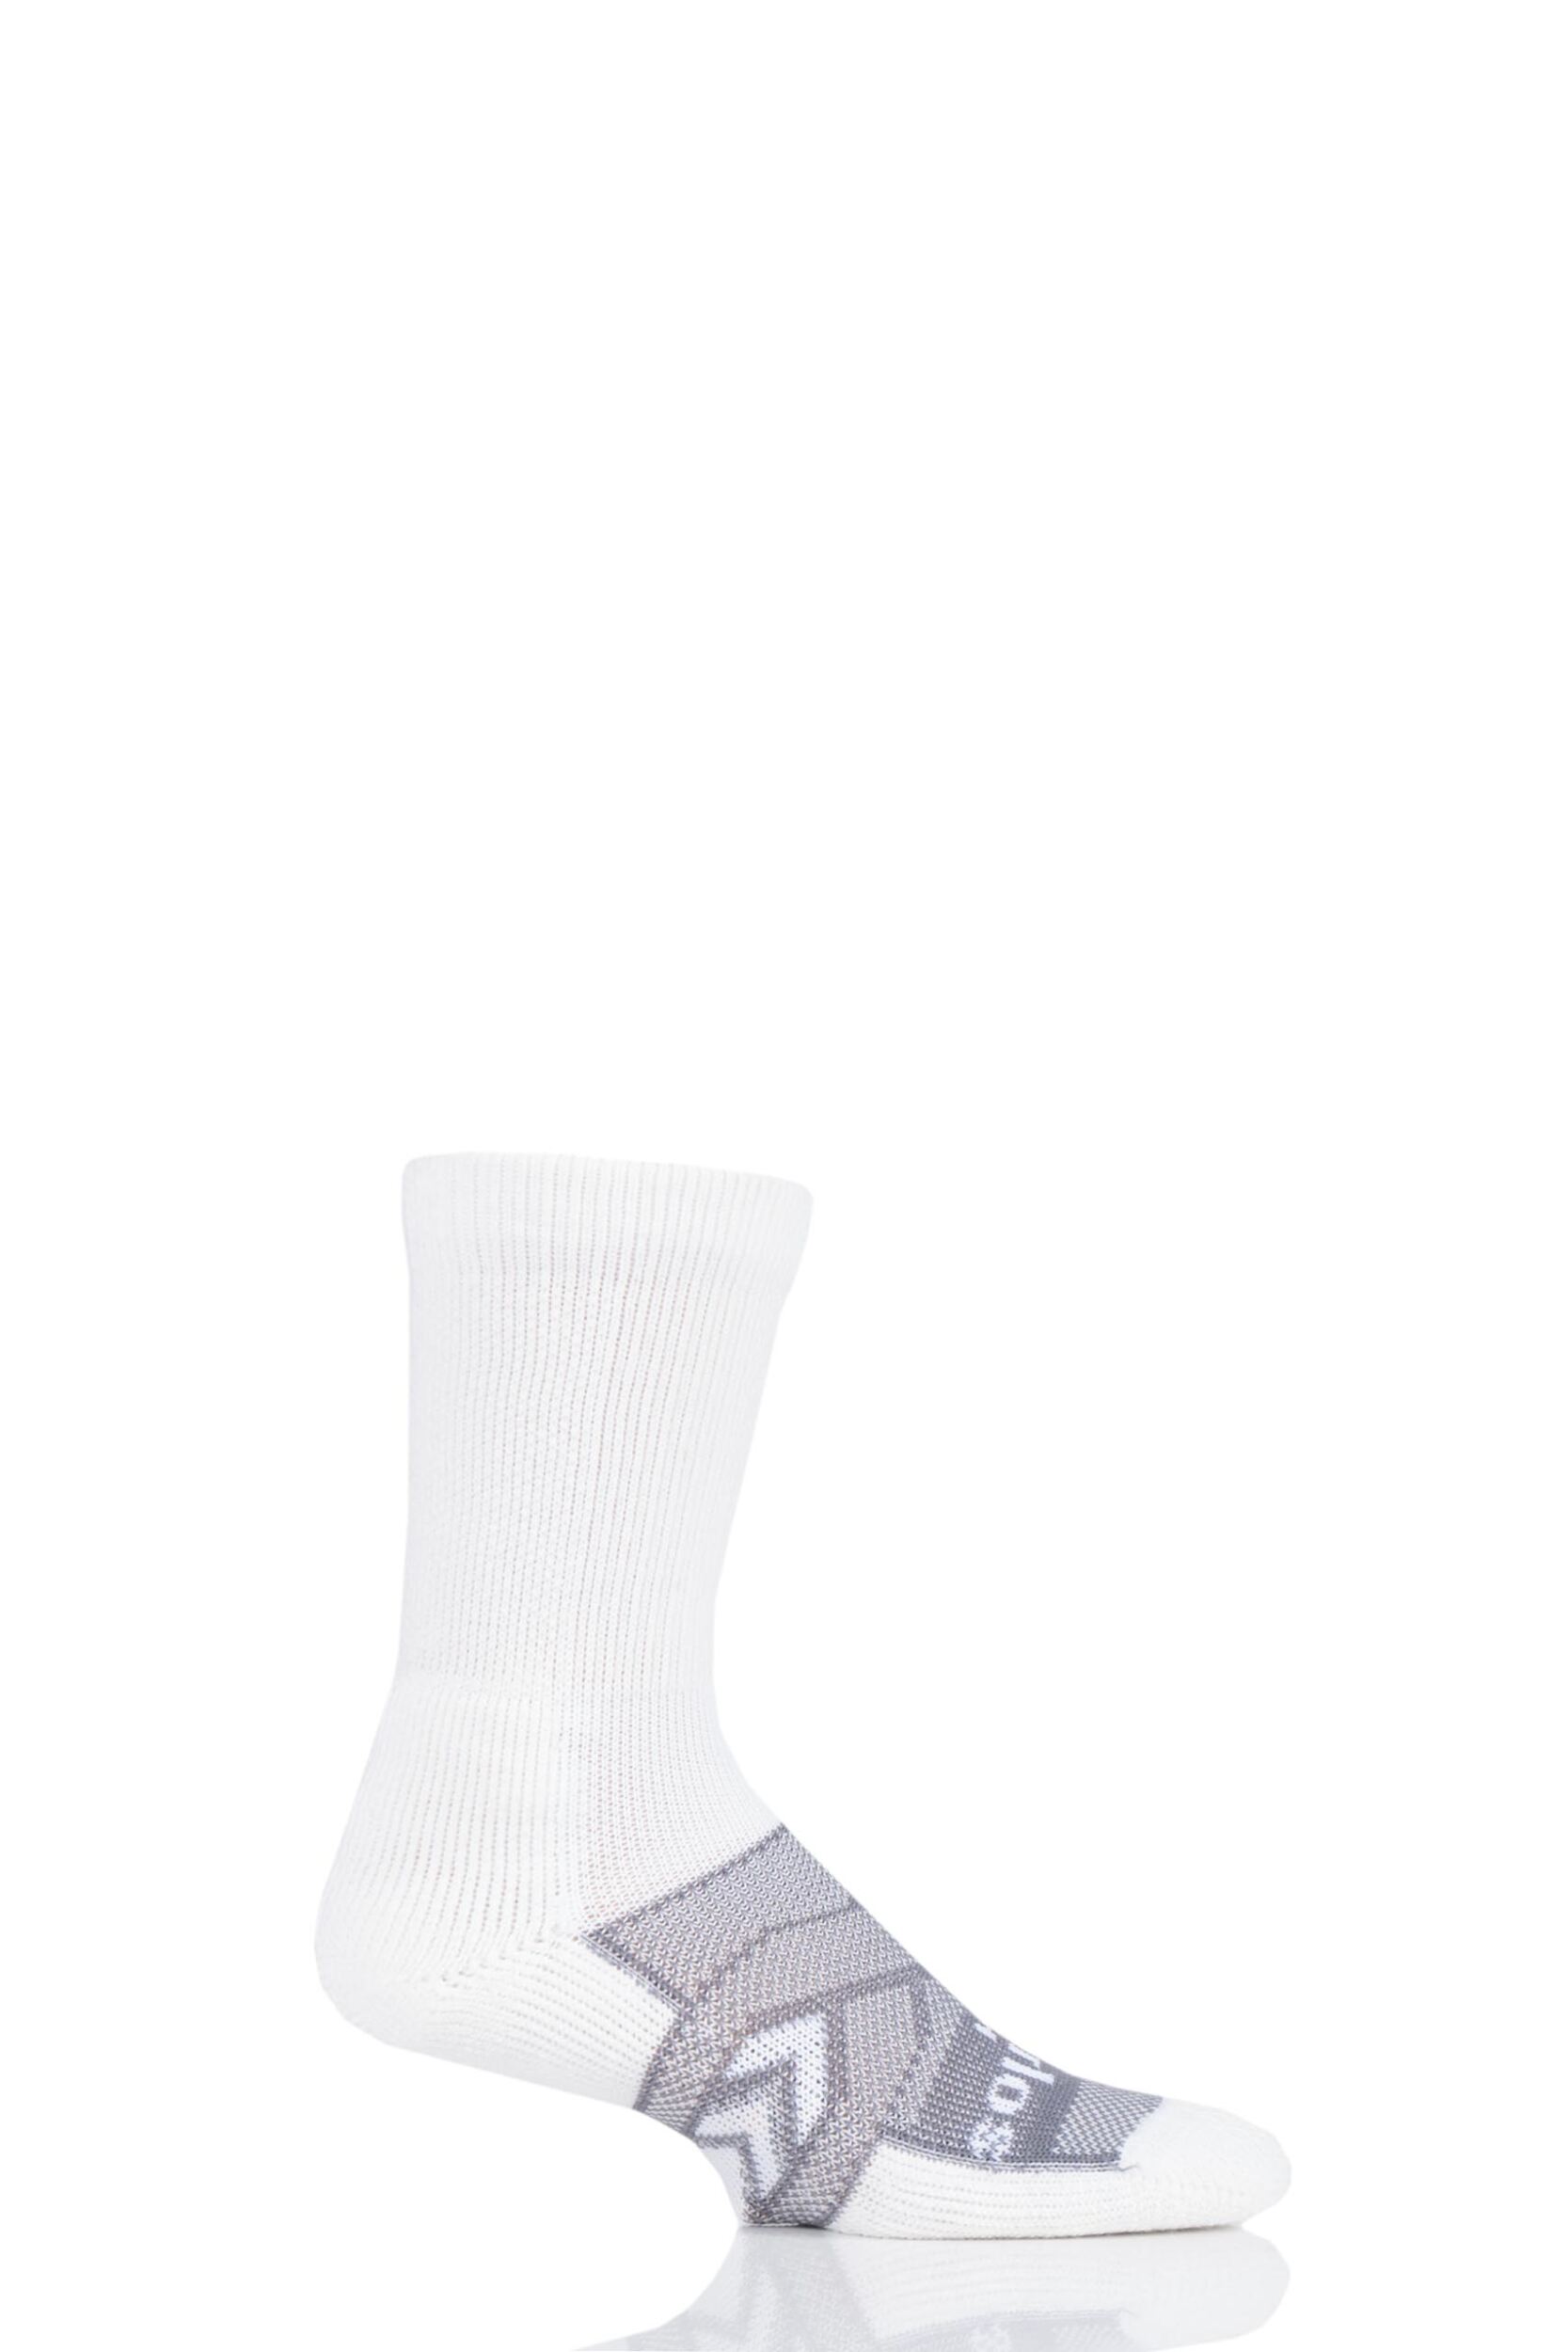 1 Pair White 12 Hour Shift Work Socks Unisex 9-12.5 Mens - Thorlos